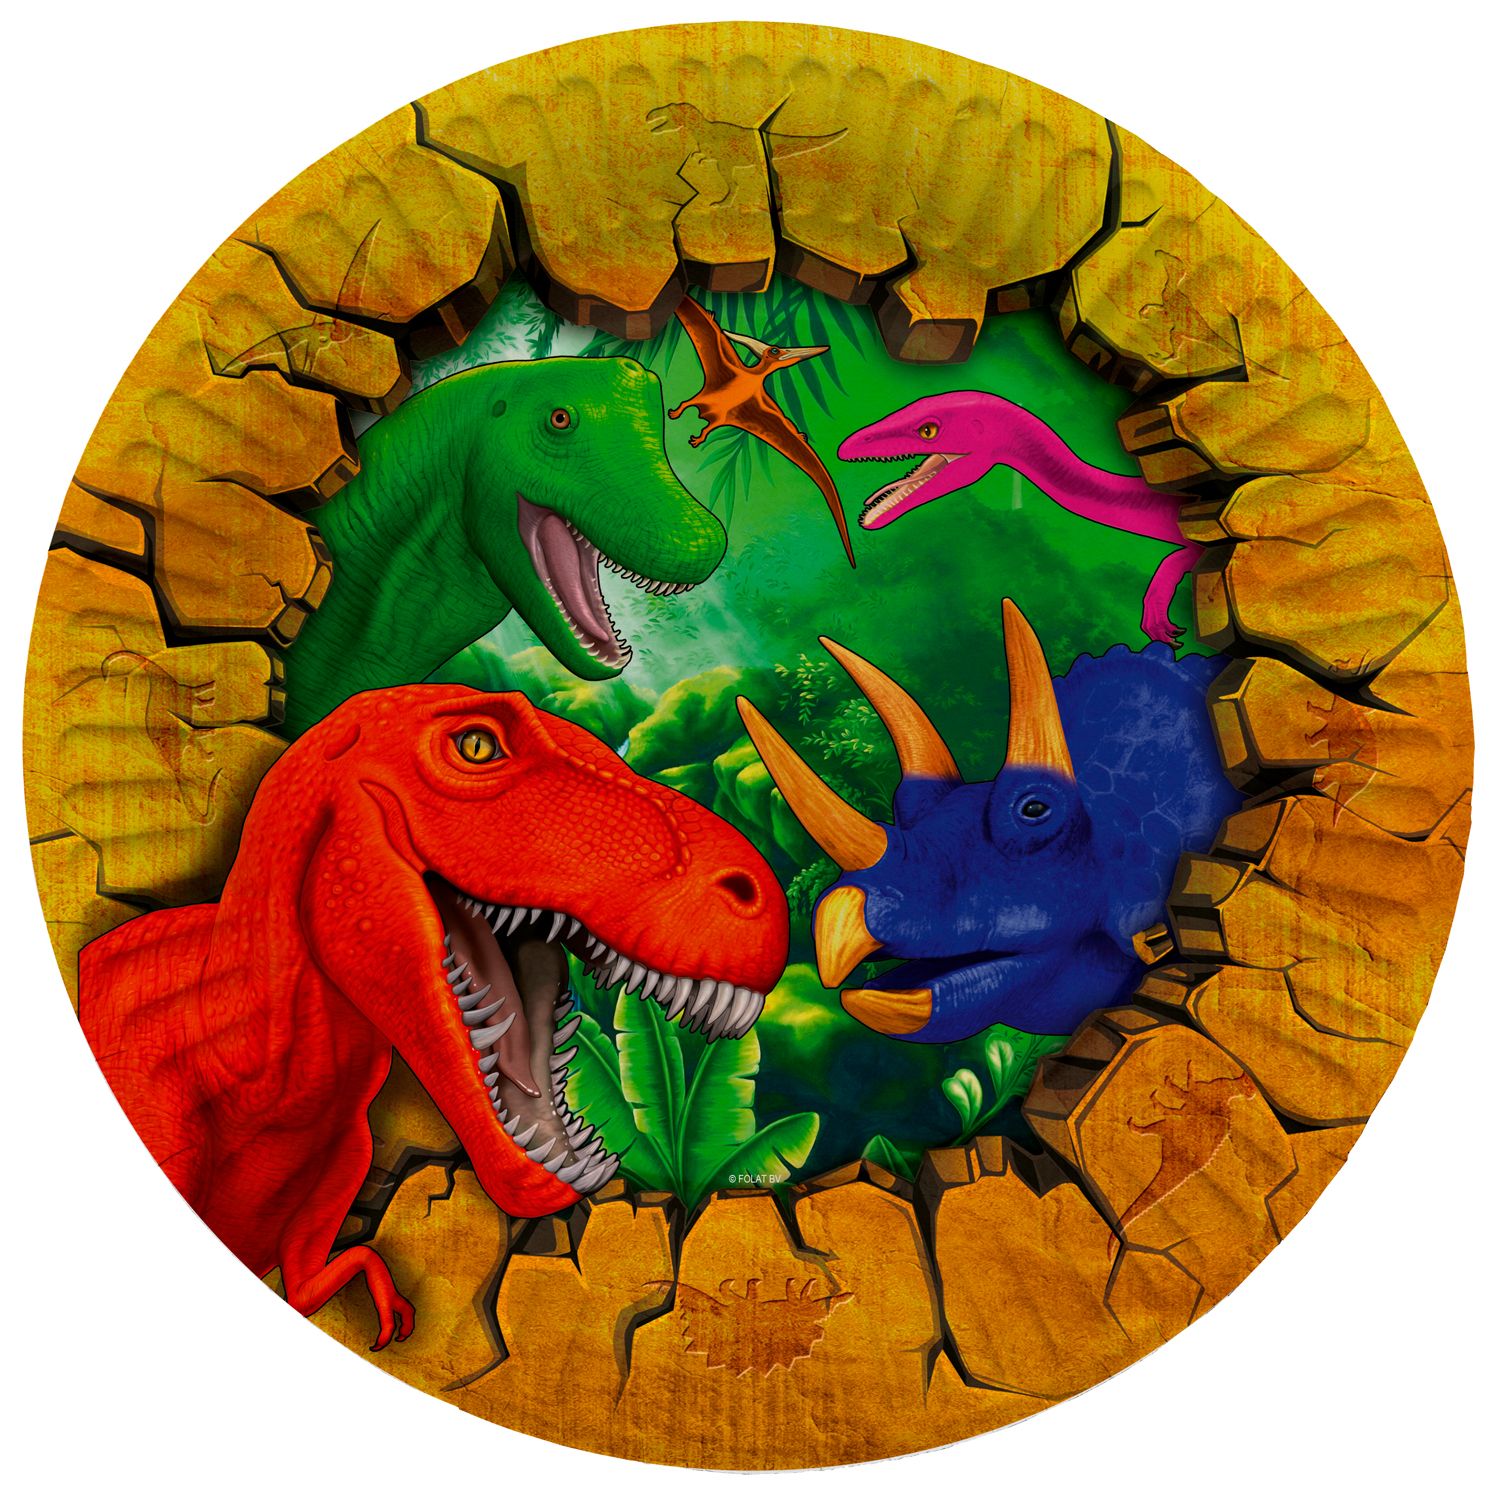 Dinosaurus feestbordjes 8 stuks